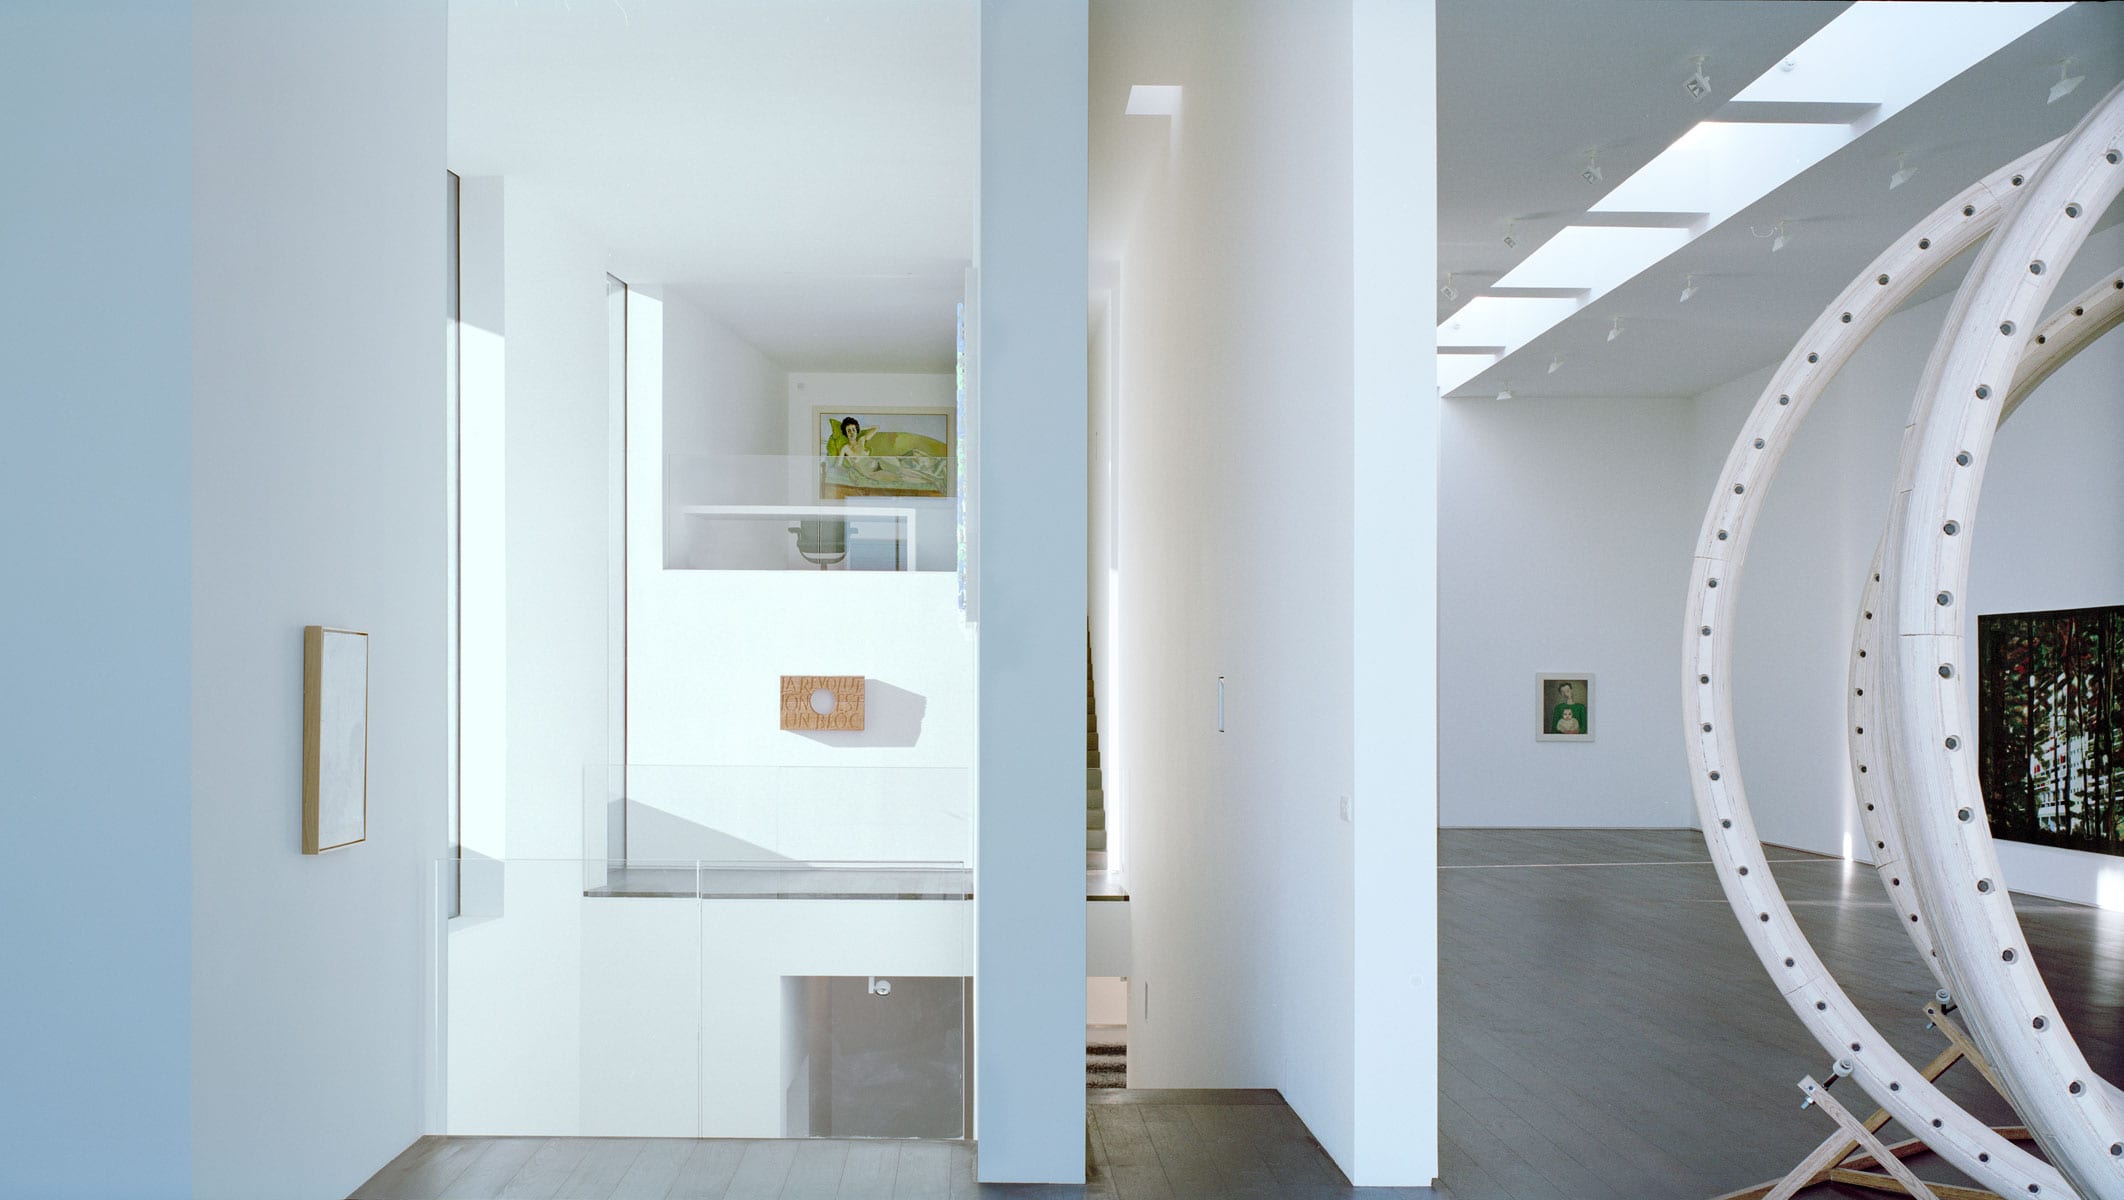 Victoria Miro Gallery interior